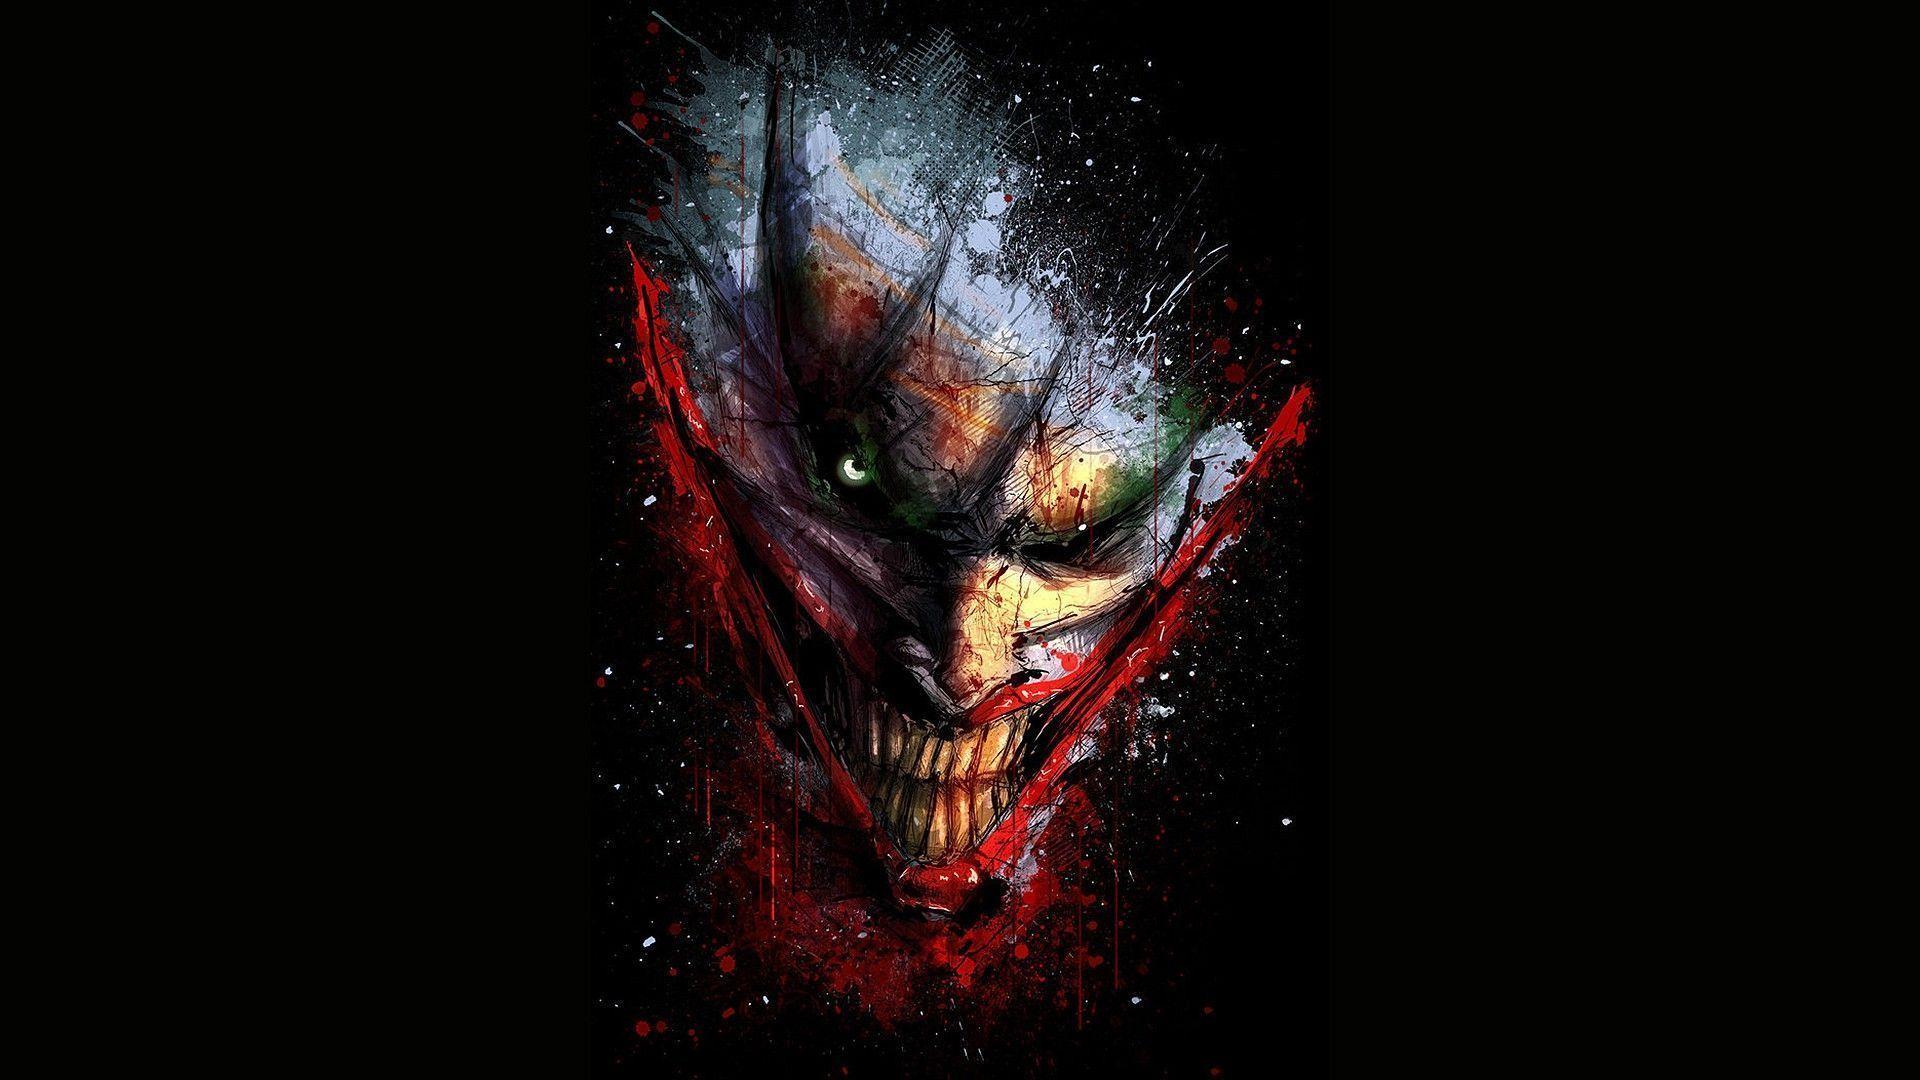 Cool Joker Wallpaper Free Cool Joker Background